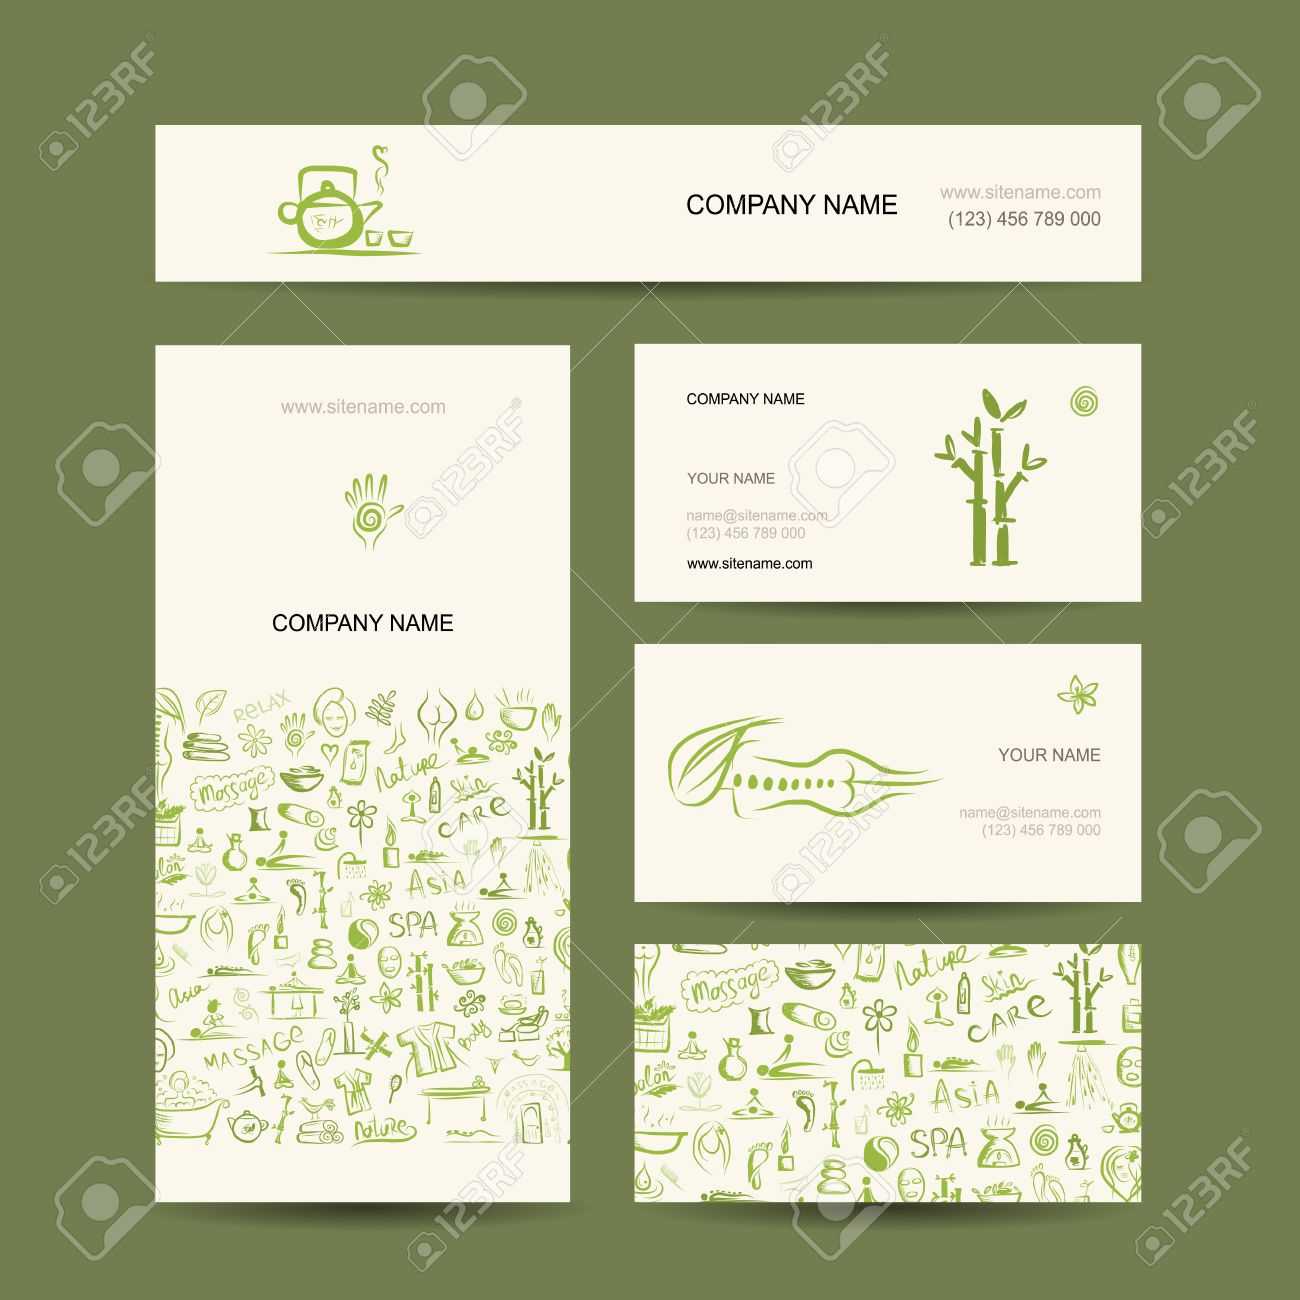 Massage Business Cards Templates ] – Massage Therapist Logo Inside Massage Therapy Business Card Templates